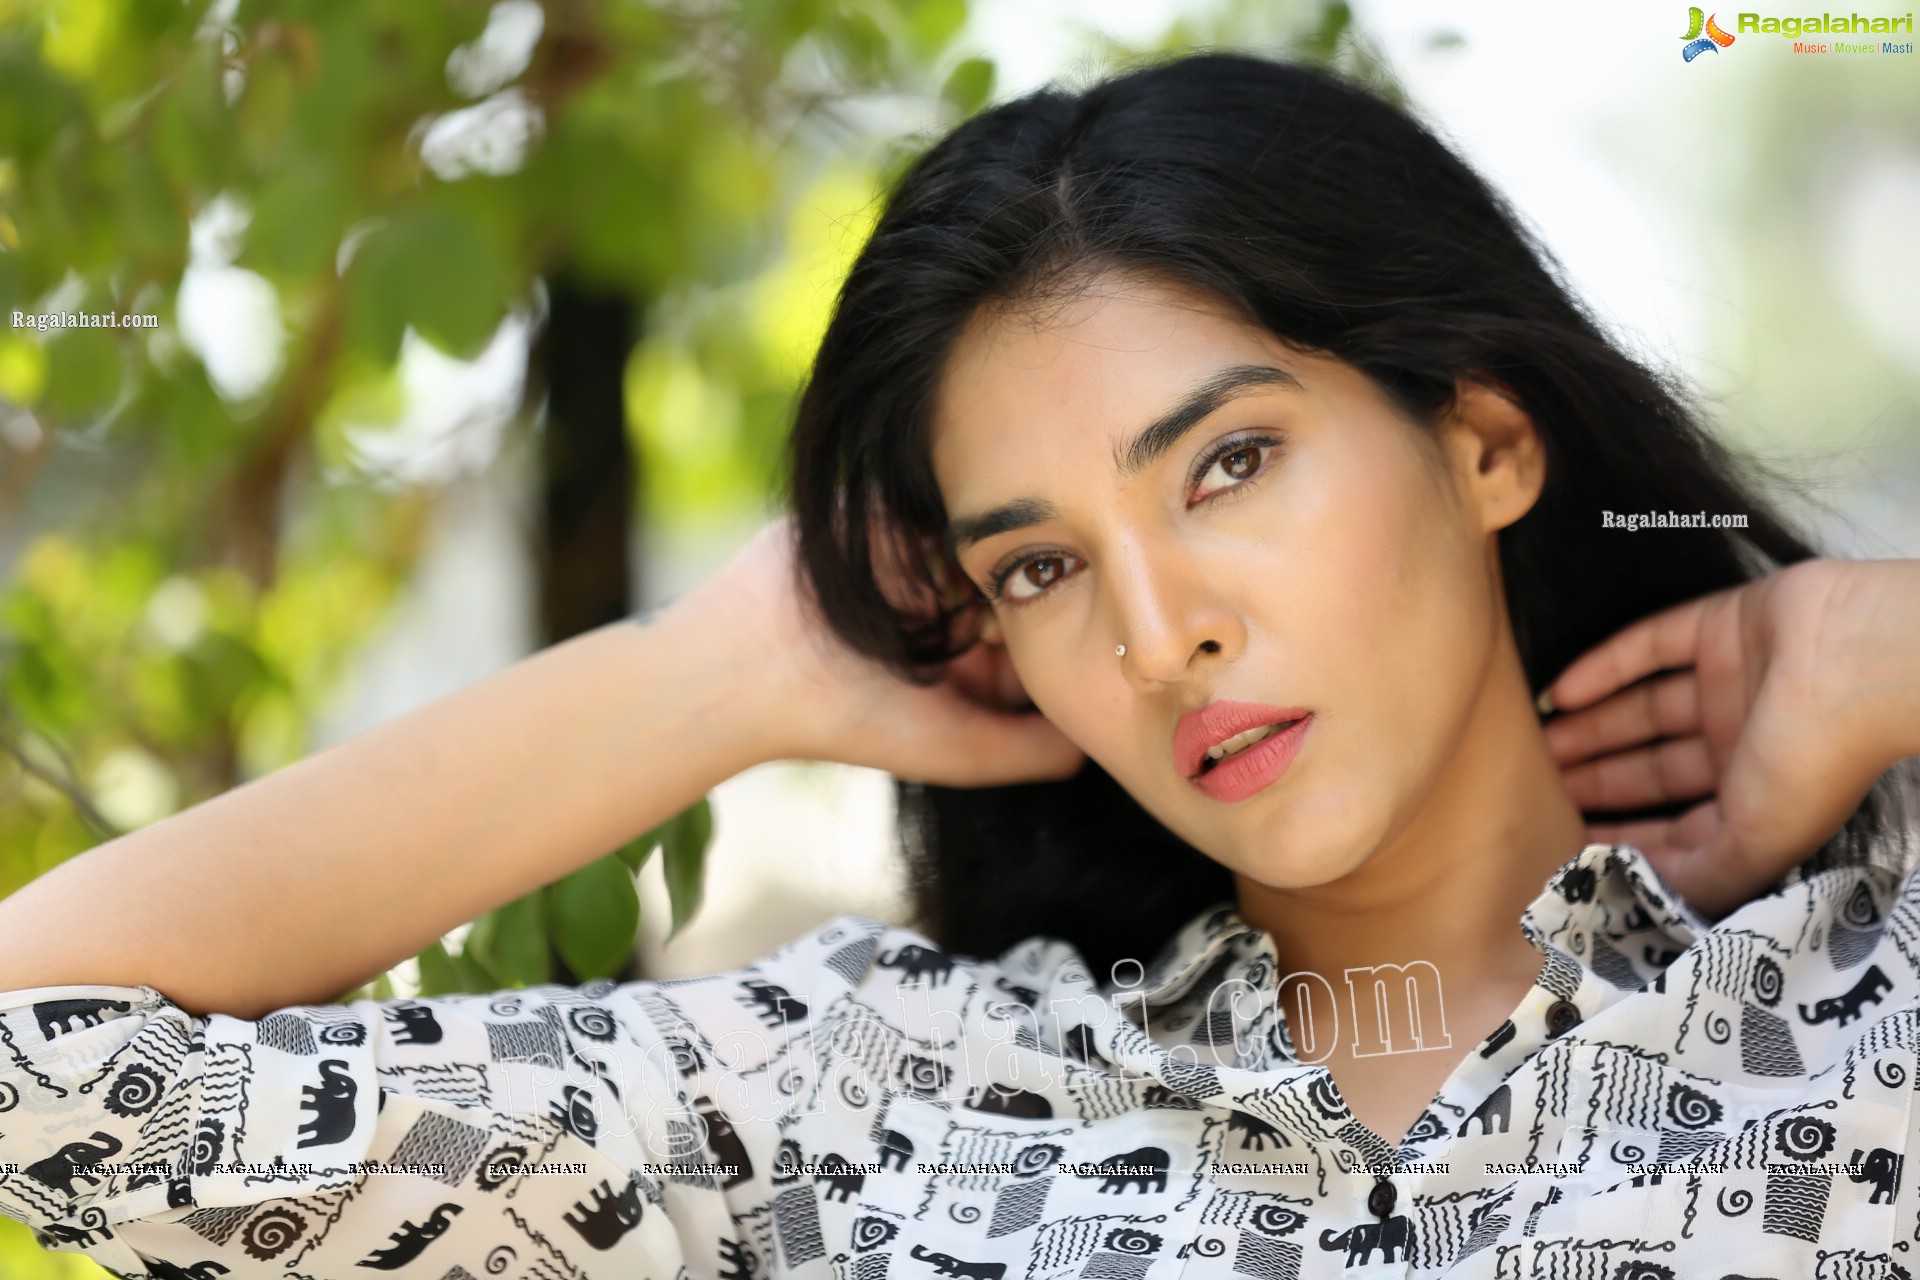 Supraja Narayan in Black and White Elephant Print Shirt, Exclusive Photo Shoot